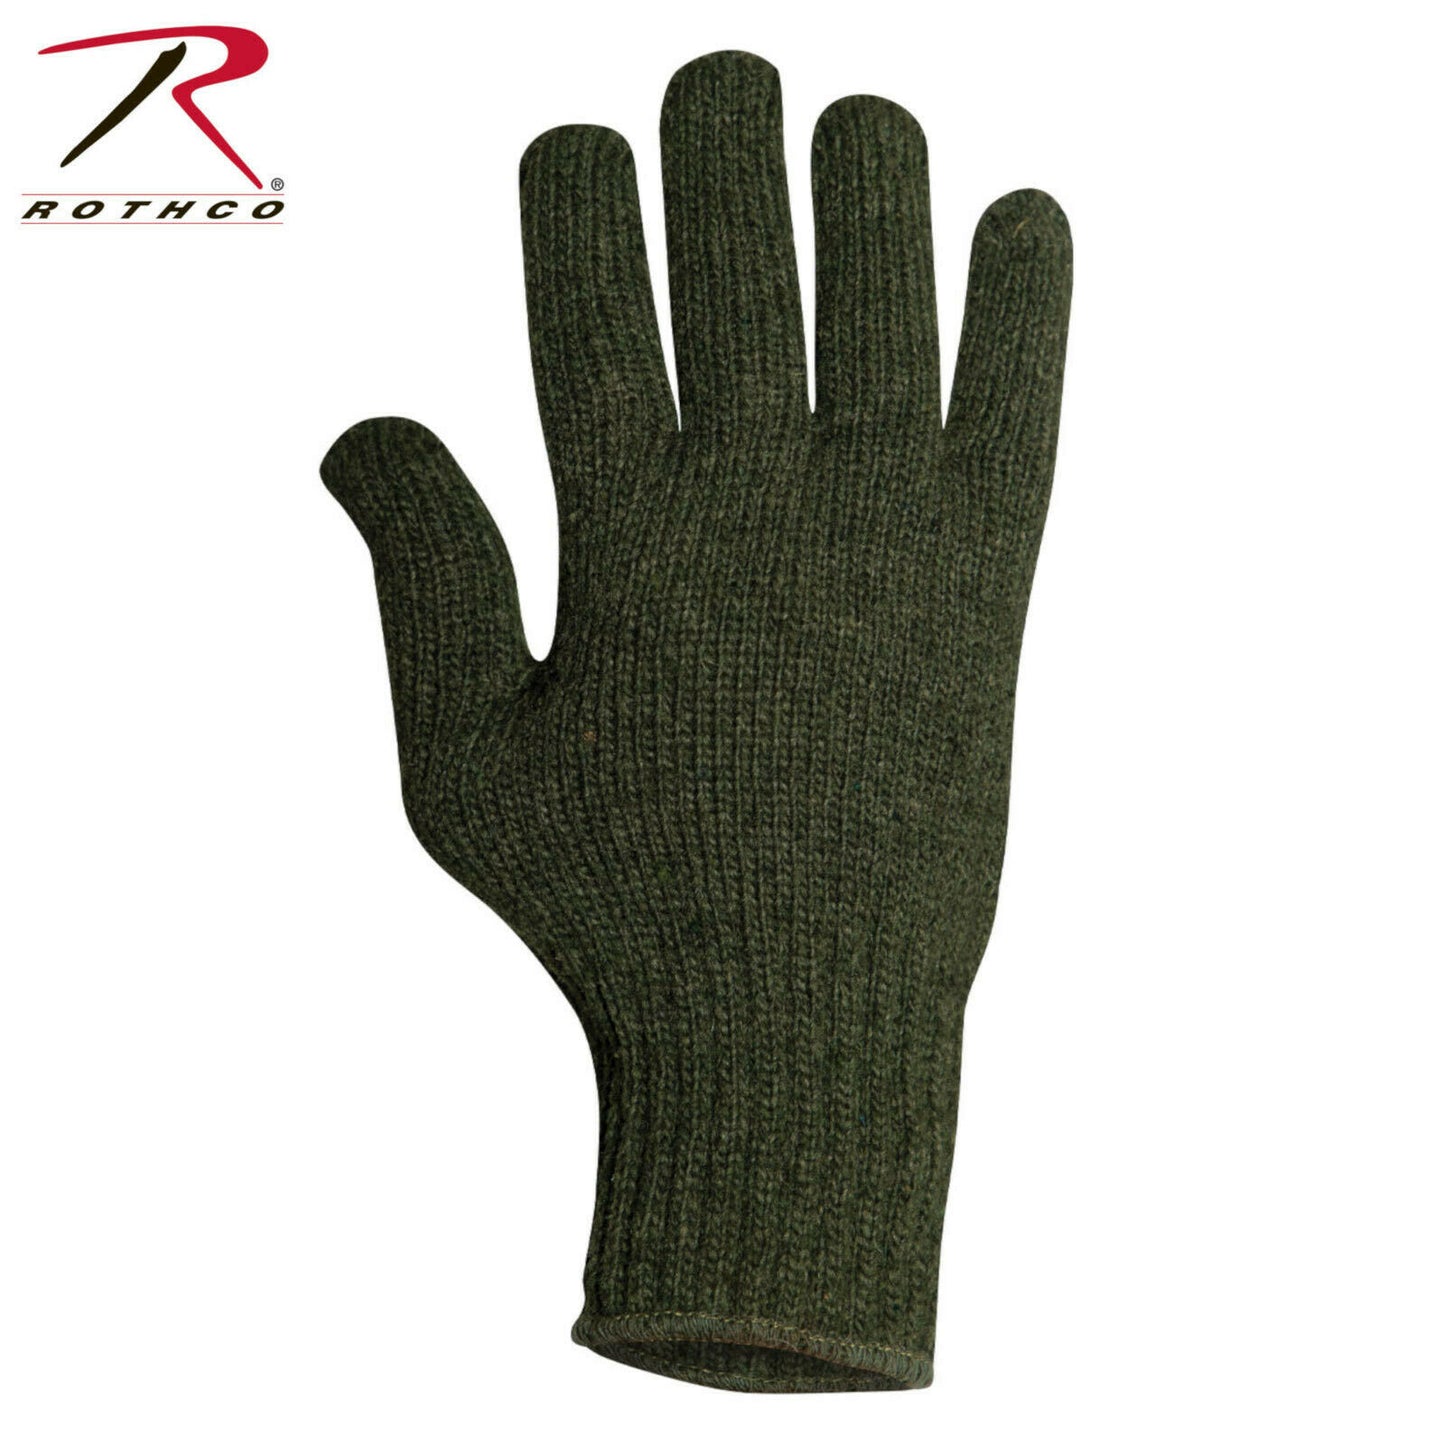 Olive Drab Wool Blend Glove Liner US Made - Winter Weather Blank Gloves